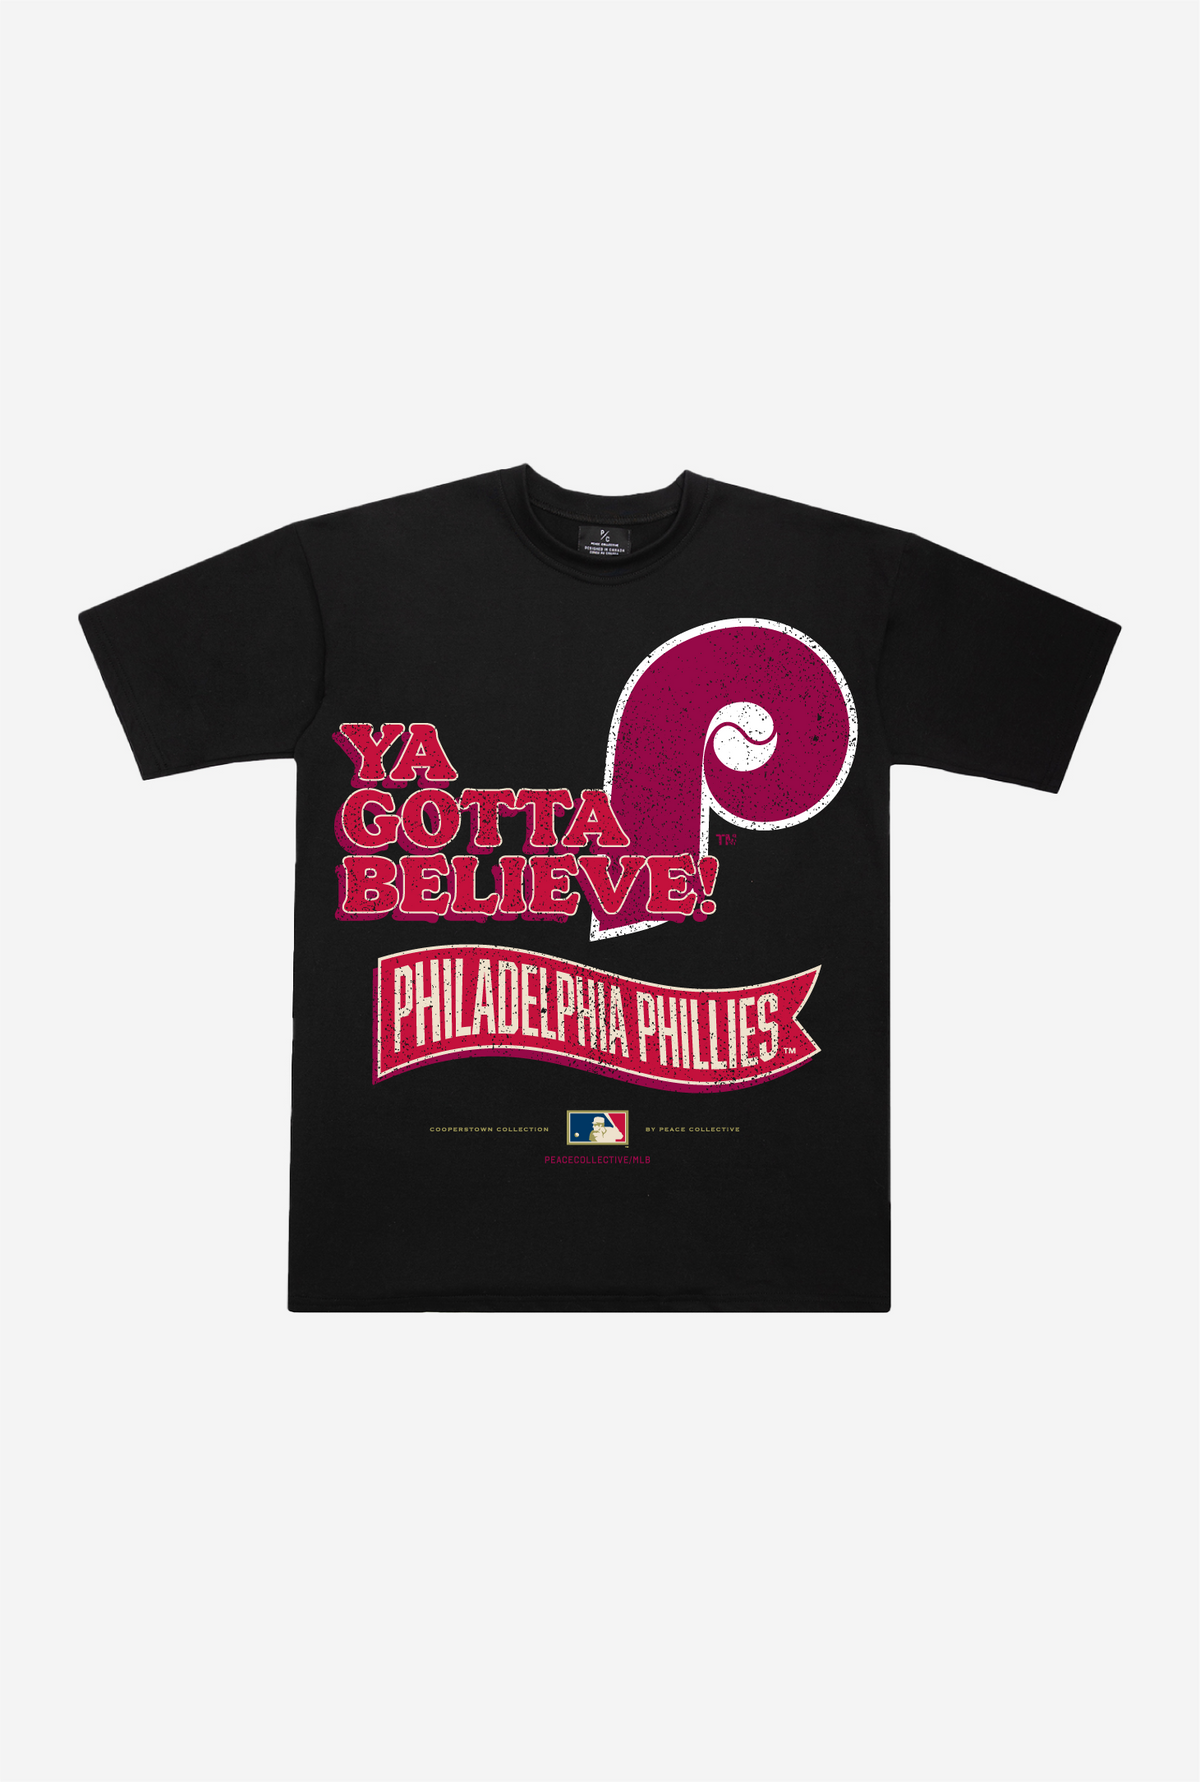 Philadelphia Phillies Slogan Cooperstown Collection Premium T-Shirt - Black